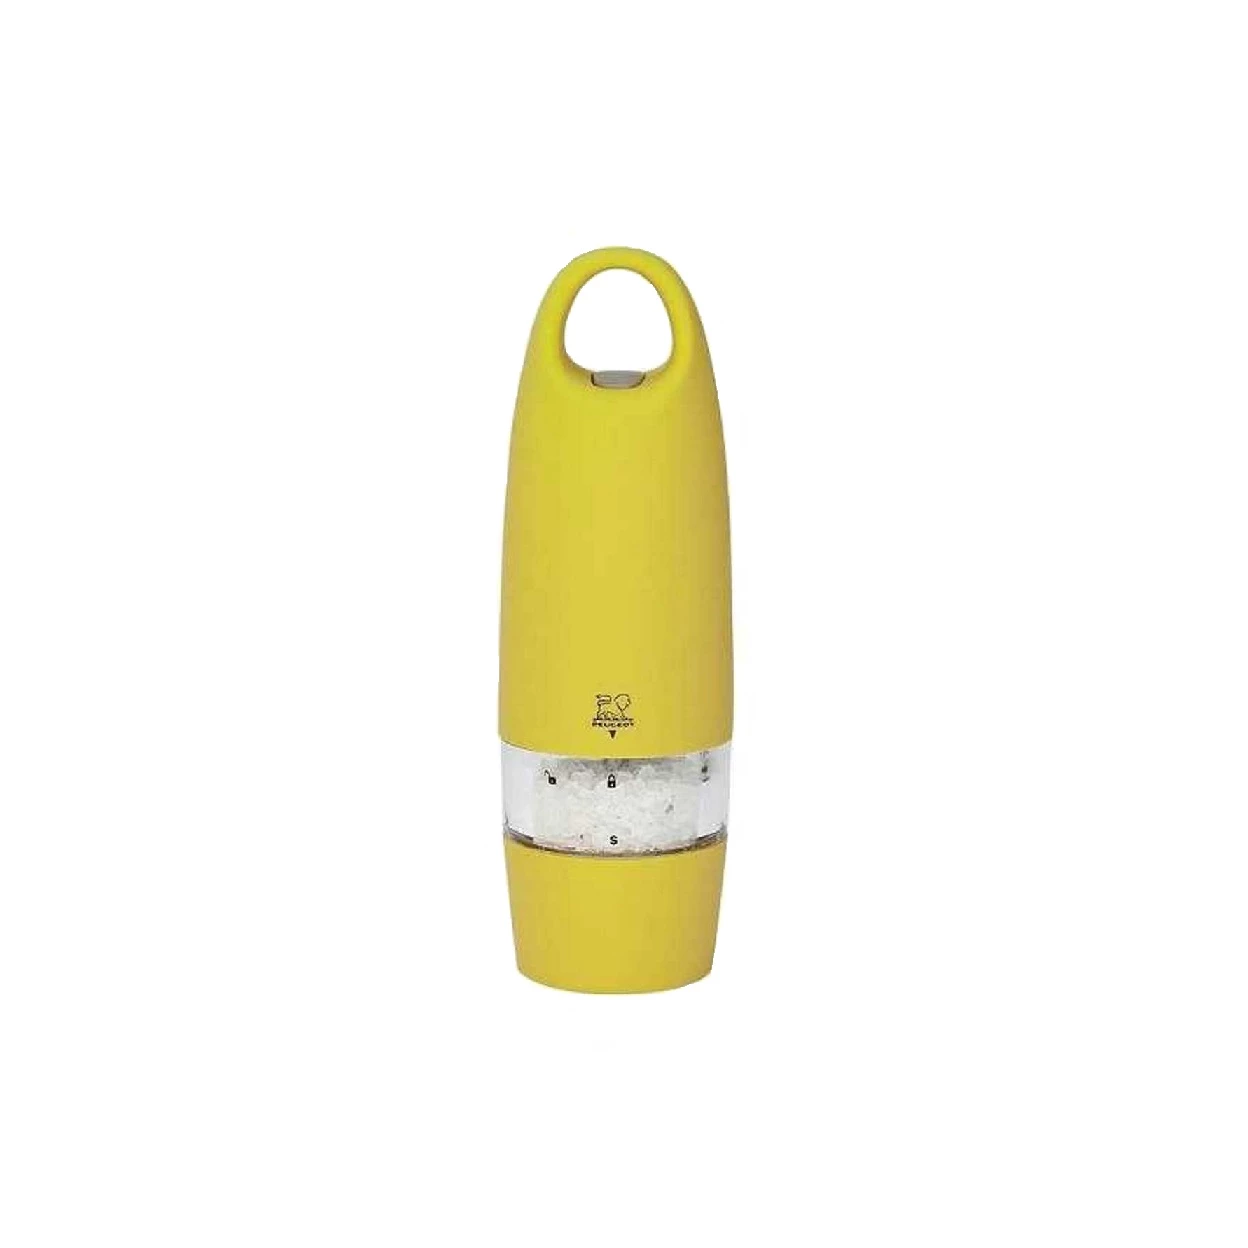 Млин електричний для солі Peugeot ZEST, висота 18 см, жовтий Peugeot 29685 фото 1